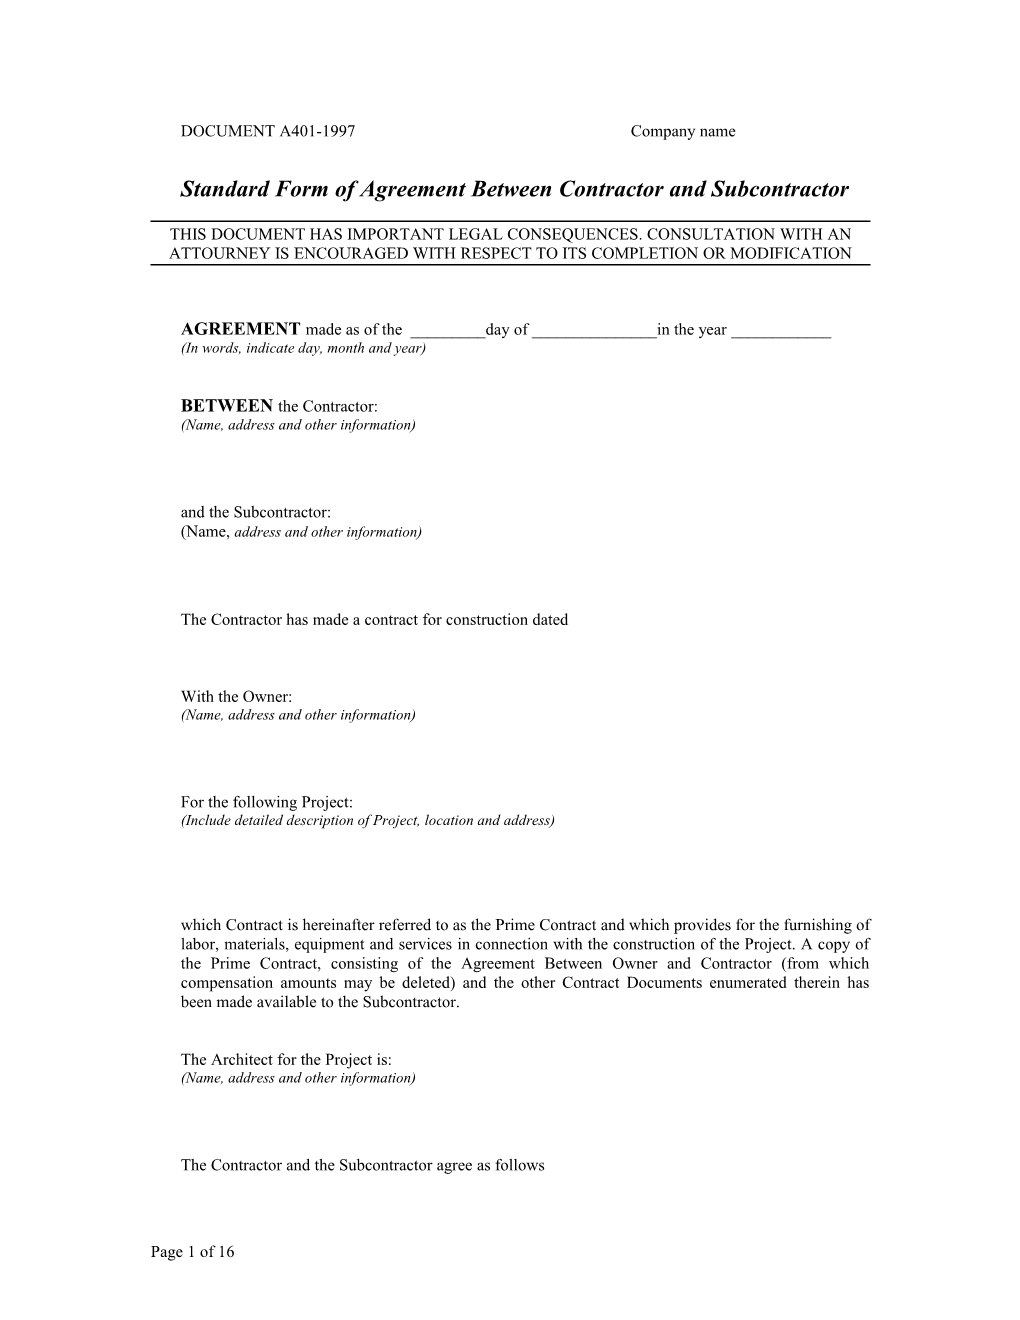 Standard Form of Agreement Between Contractor and Subcontractor